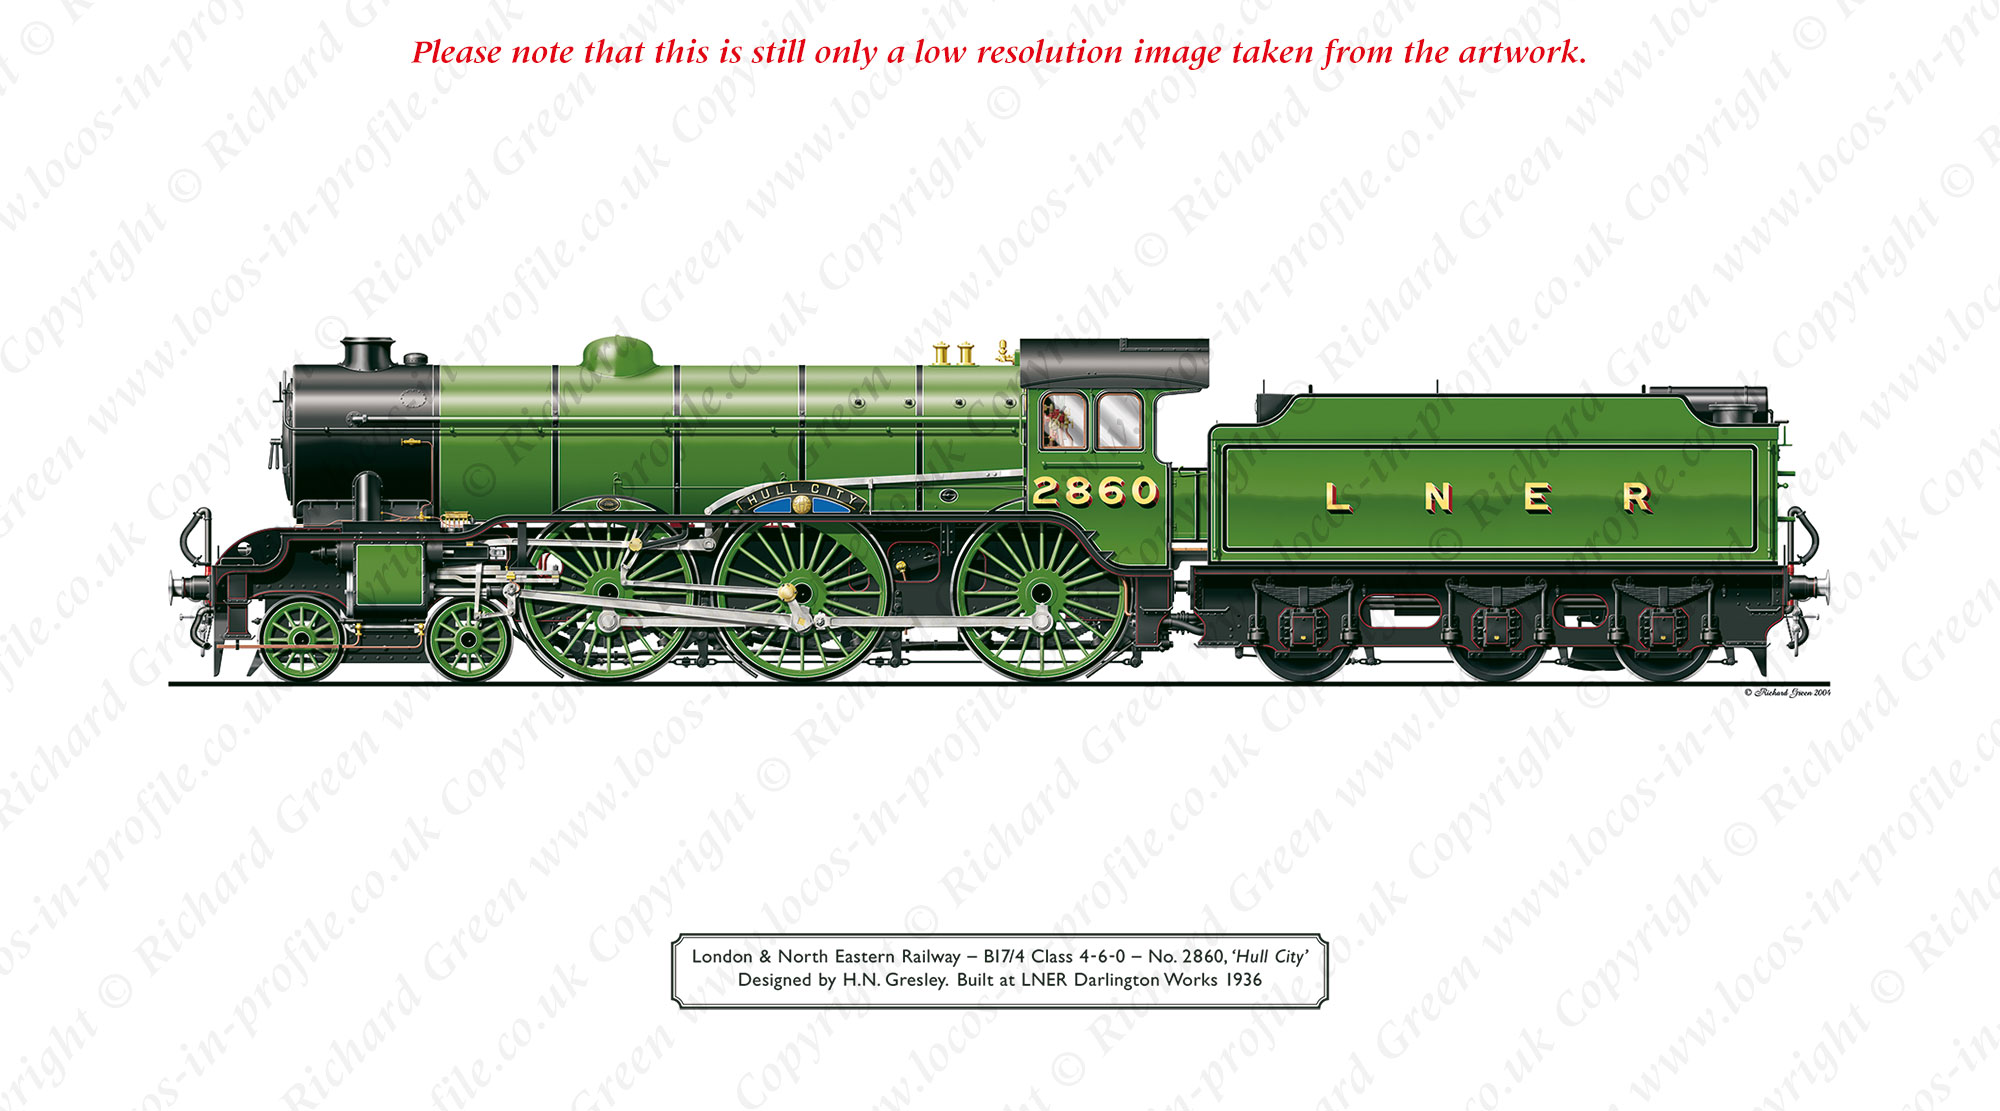 LNER B17/4 Footballer No 2860 (61660) Hull City (H. N. Gresley) Steam Locomotive Print